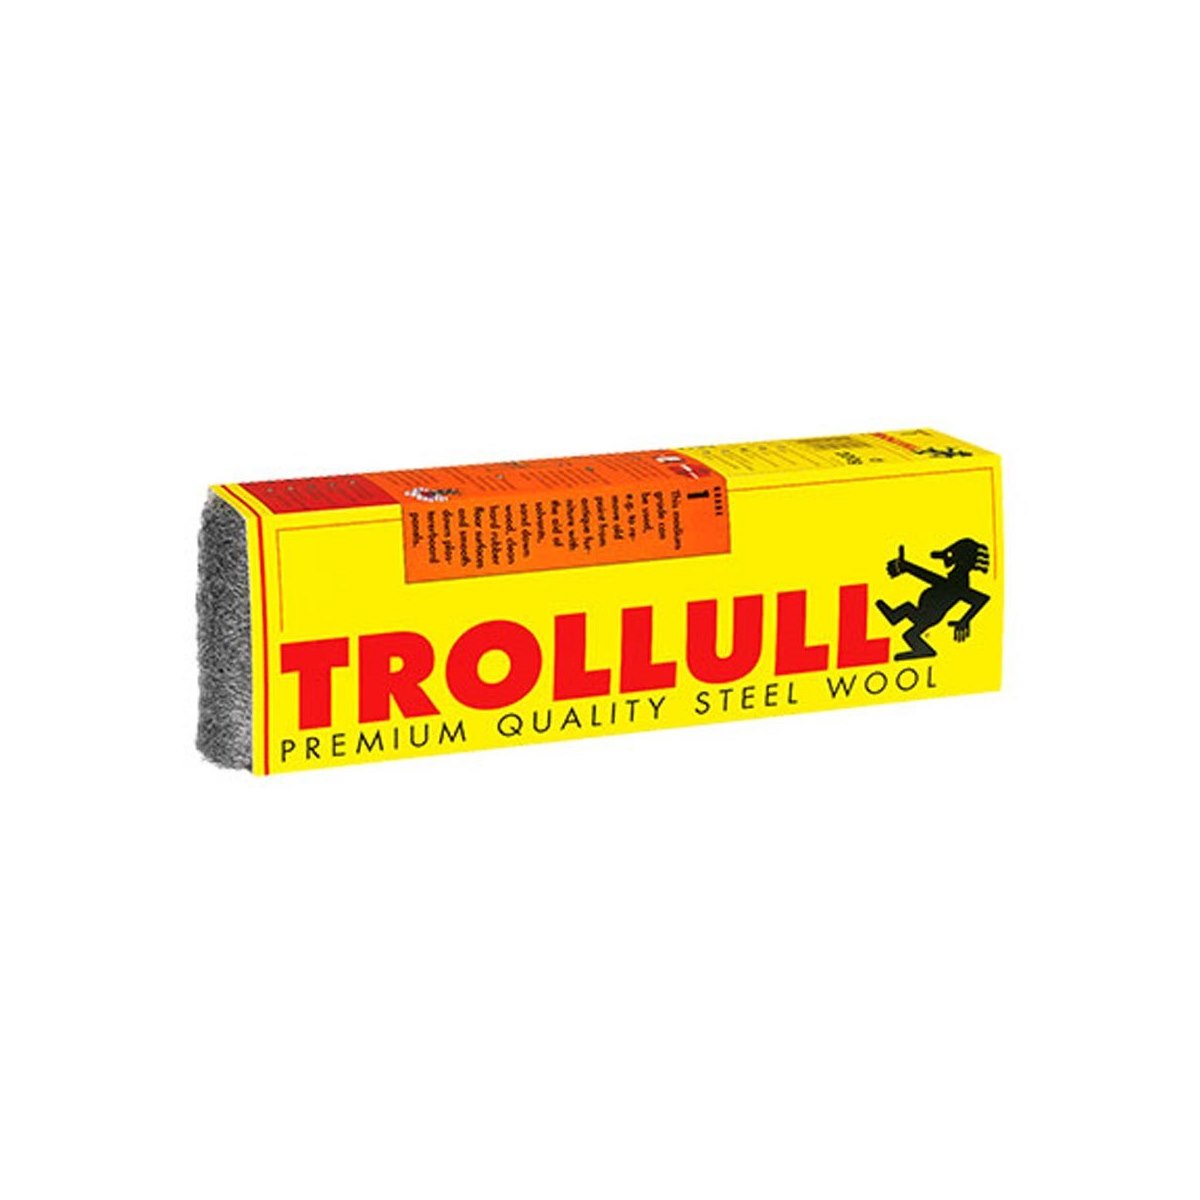 Trollull Steel Wool 200g Sleeve 00